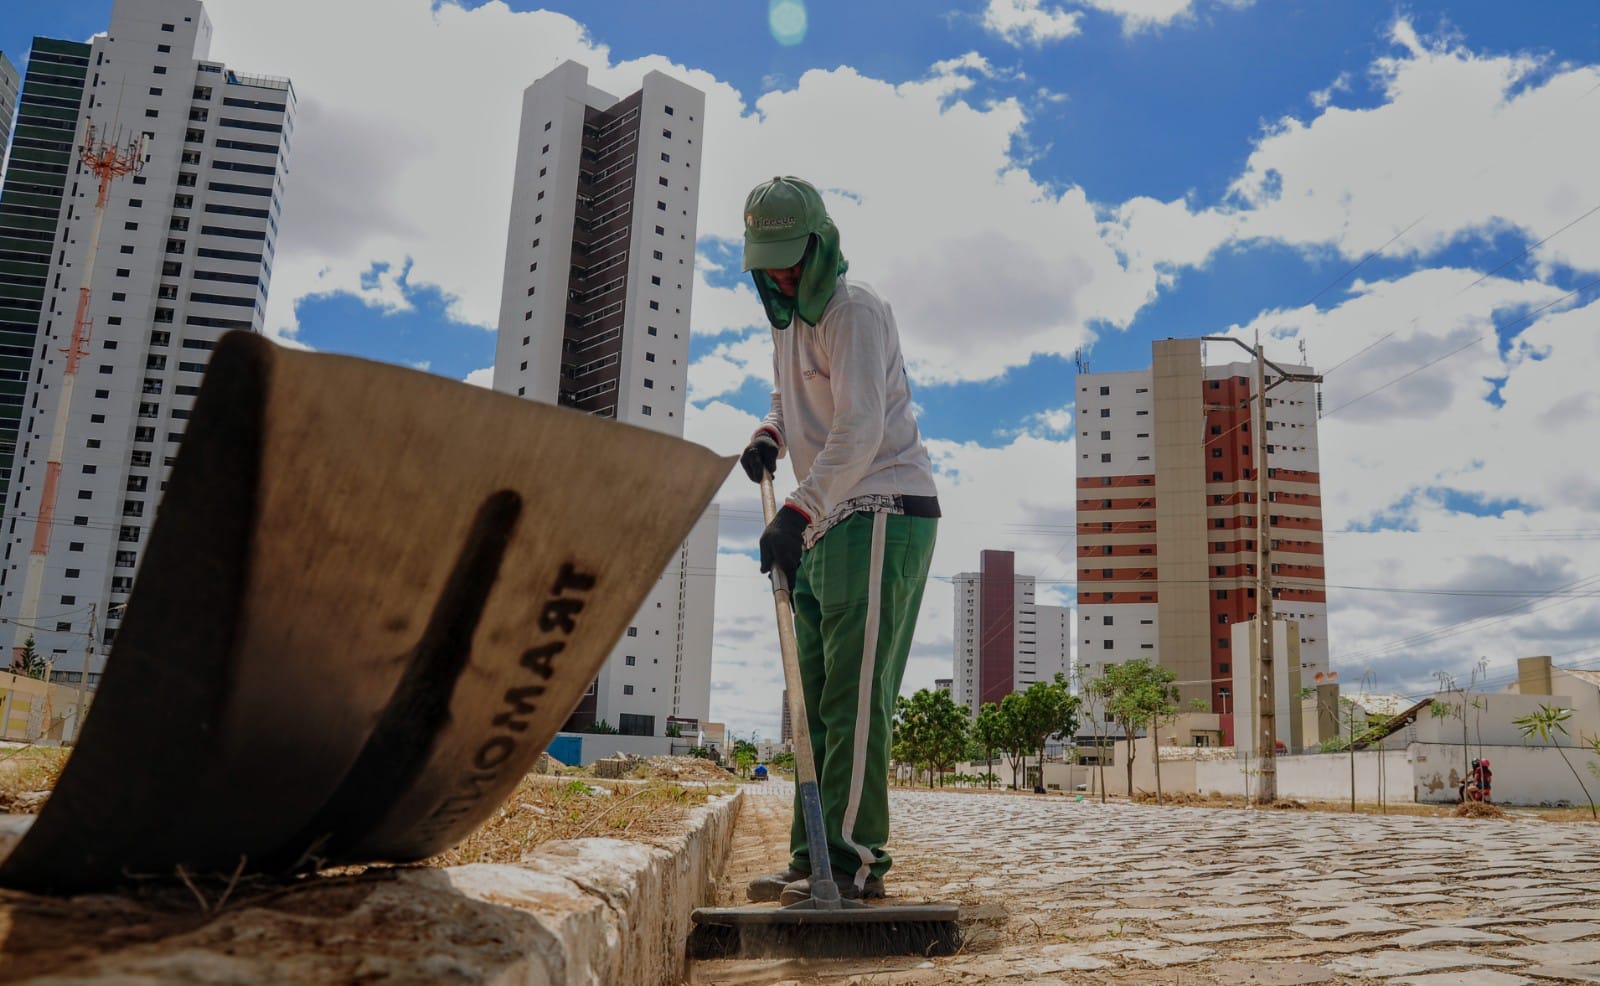 Equipes da limpeza urbana realizam trabalho na Avenida Mota Neto